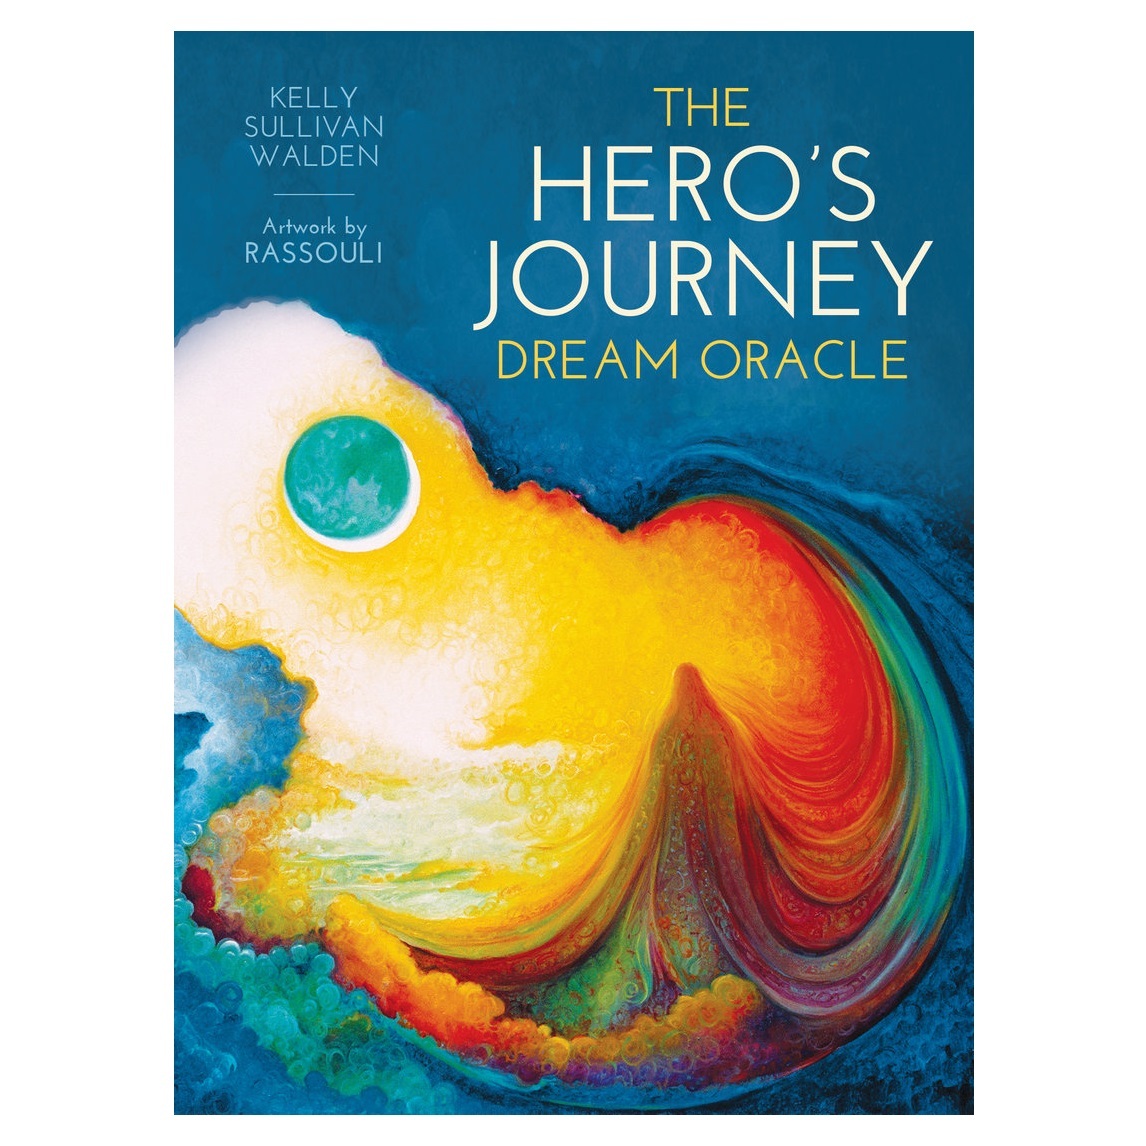 

Оракул сновидений "Путешествие Героя" (The Hero's Journey Dream Oracle)